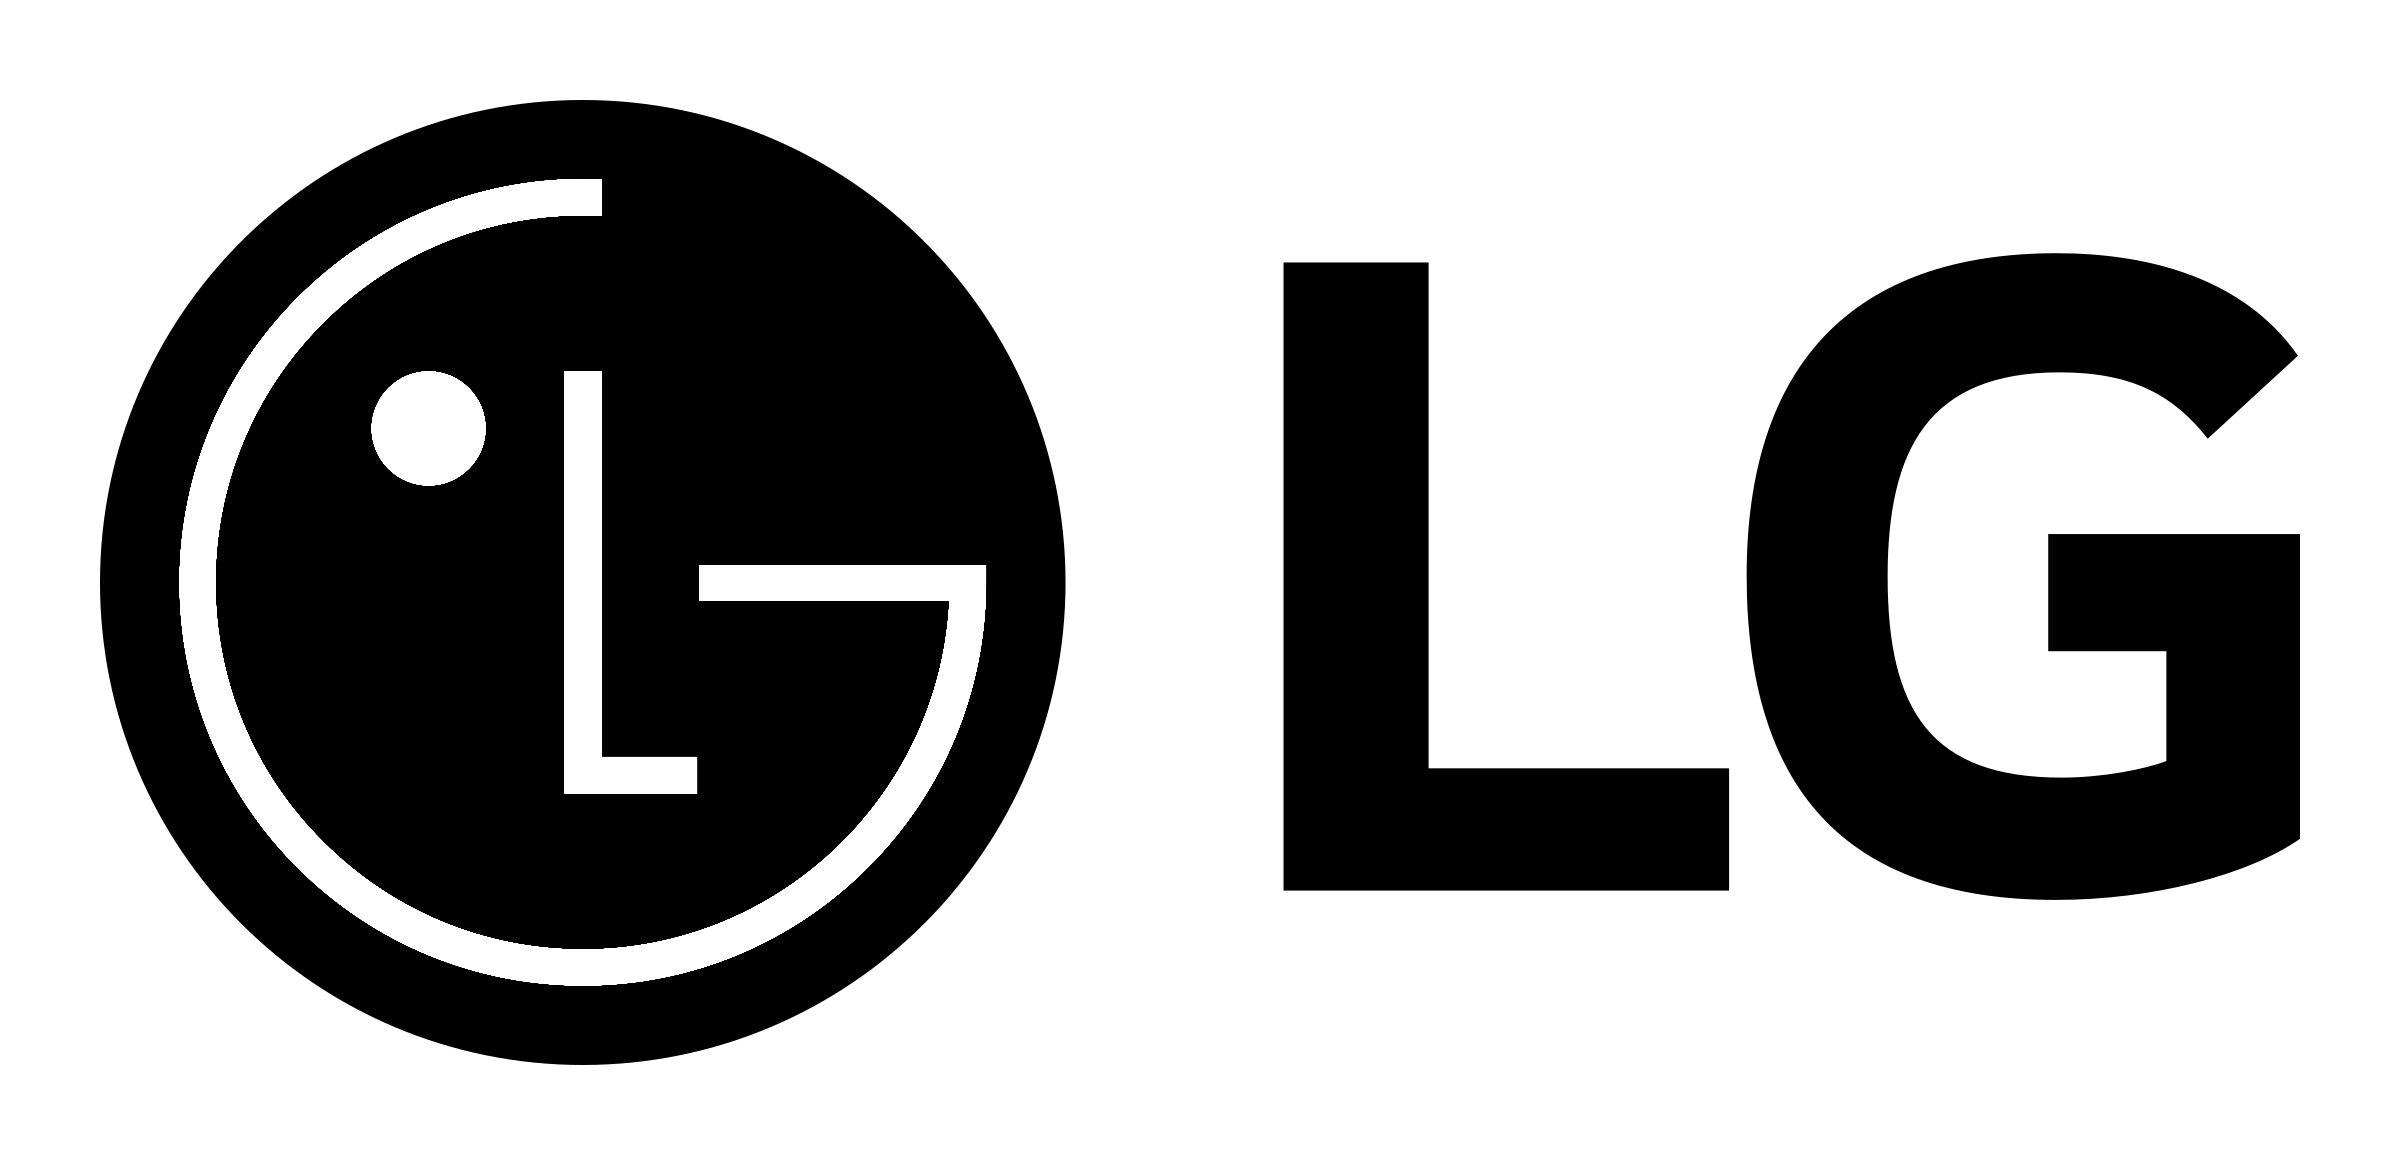 lg-logo-black-and-white